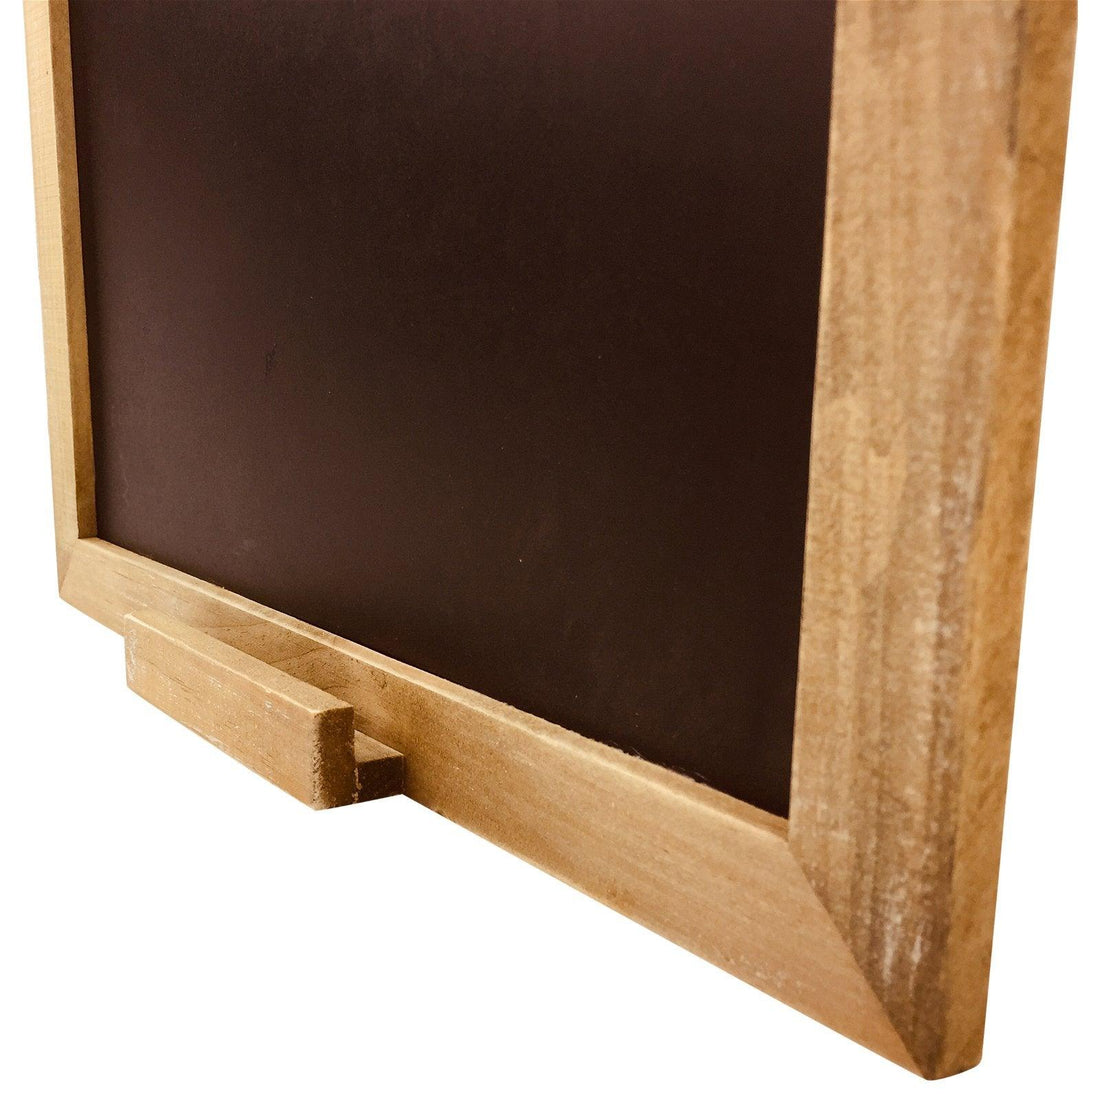 Rustic General Store Blackboard 55cm - £21.99 - Blackboards, Memo Boards & Calendars 